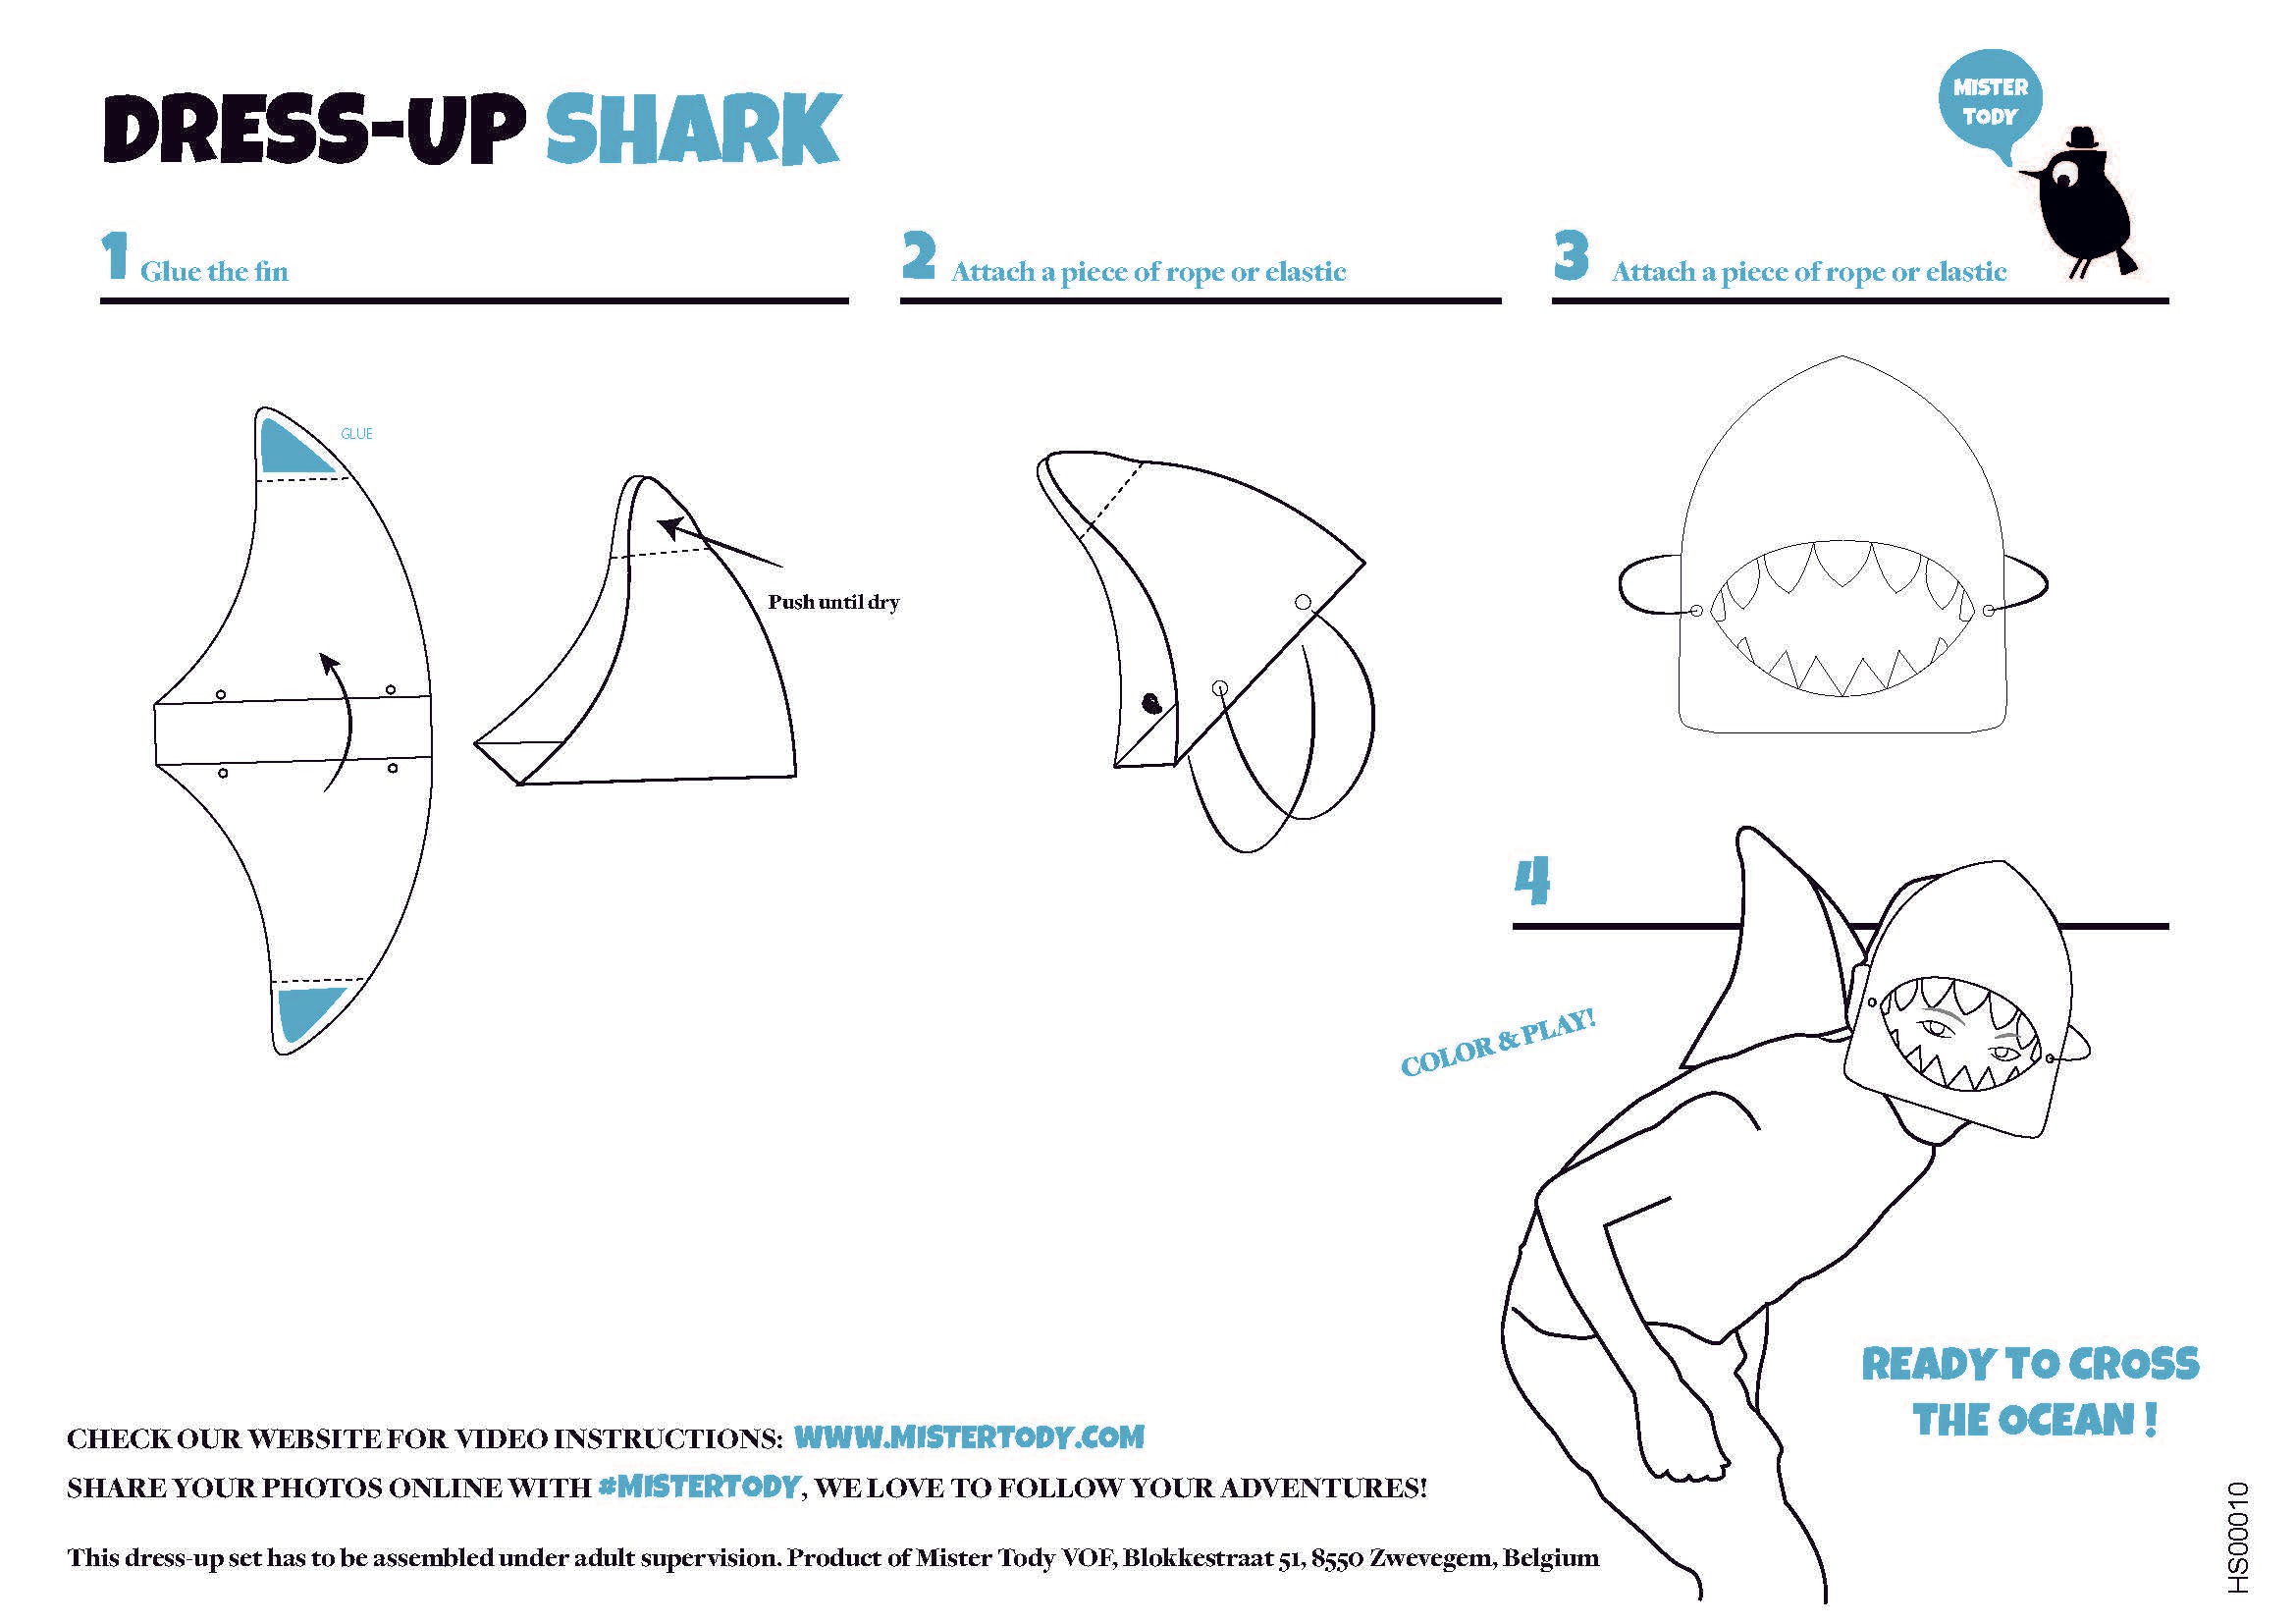 Shark cardboard dress-up